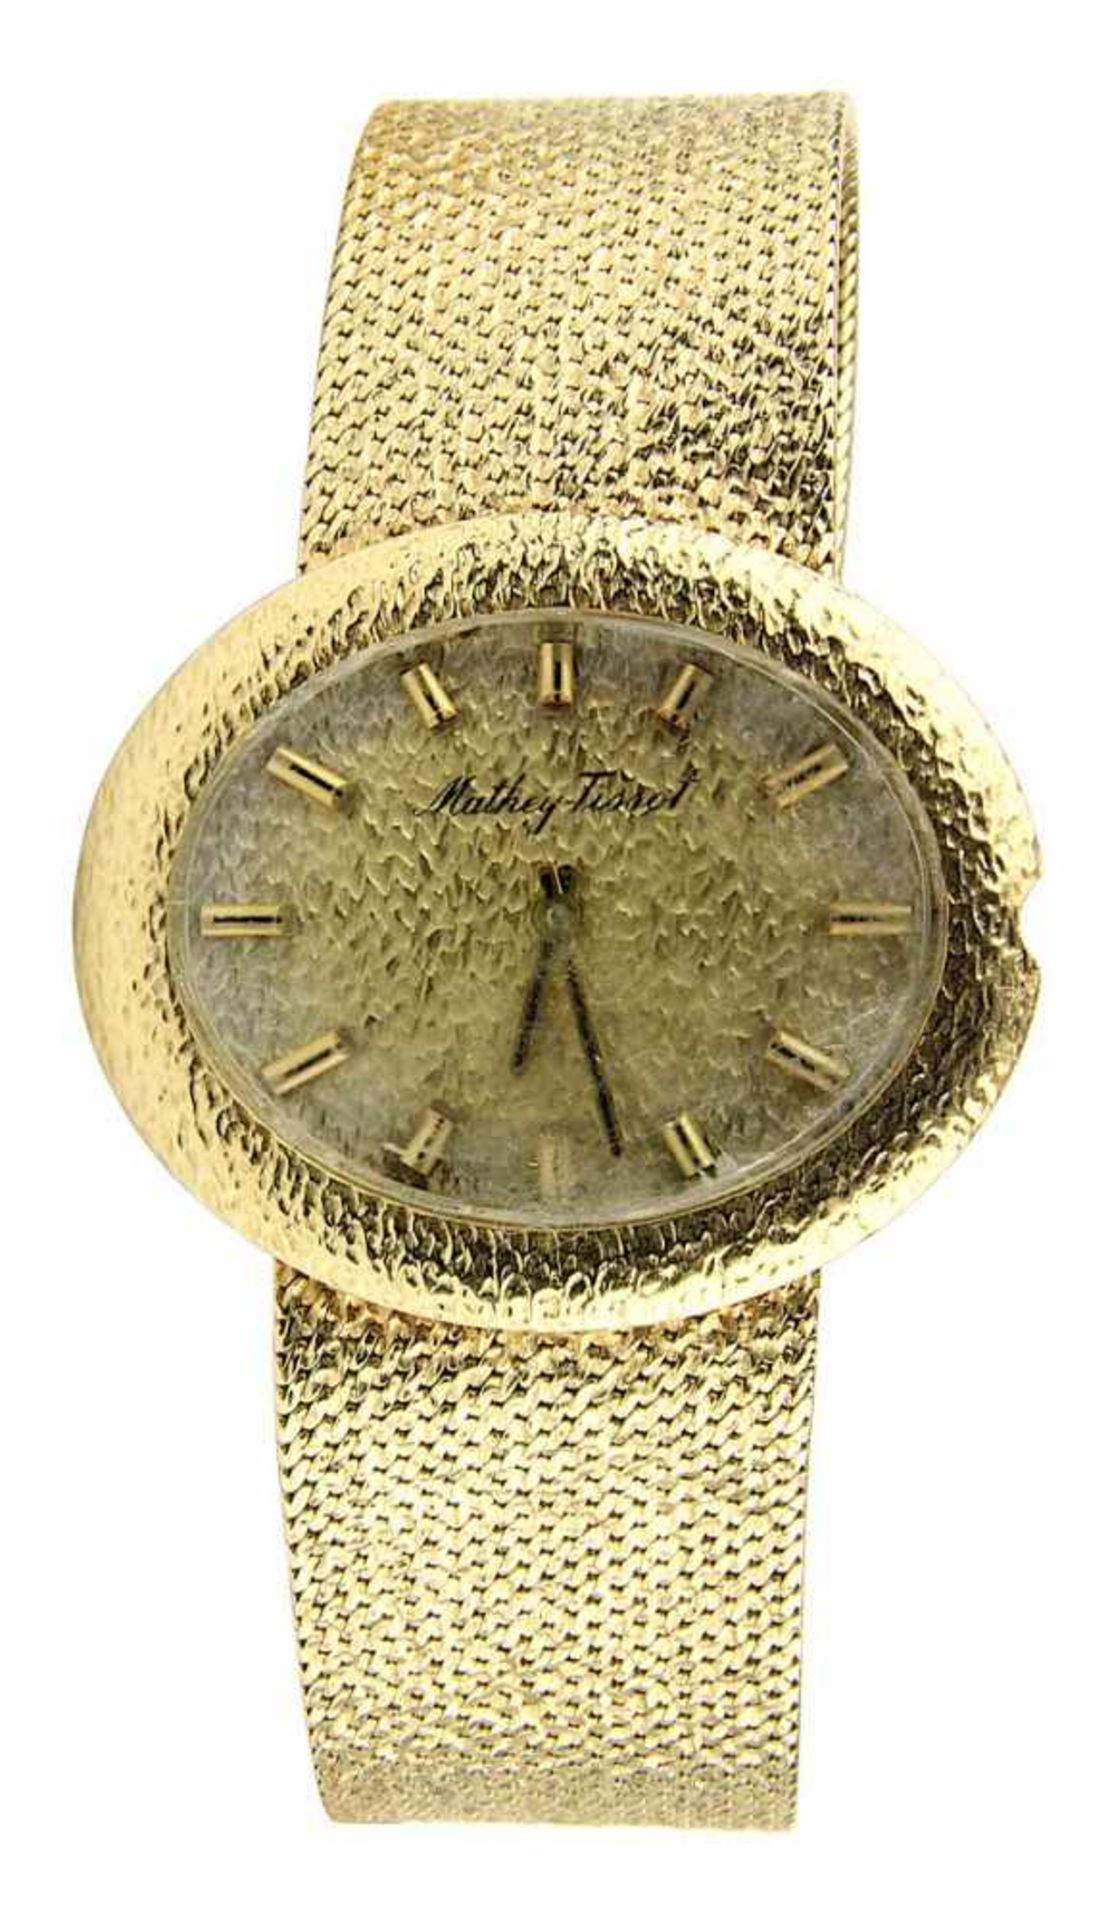 Mathey-Tissot Goldene Herren-Armbanduhr, Schweiz um 1960, ovales Zifferblatt mit Kunststoffglas,